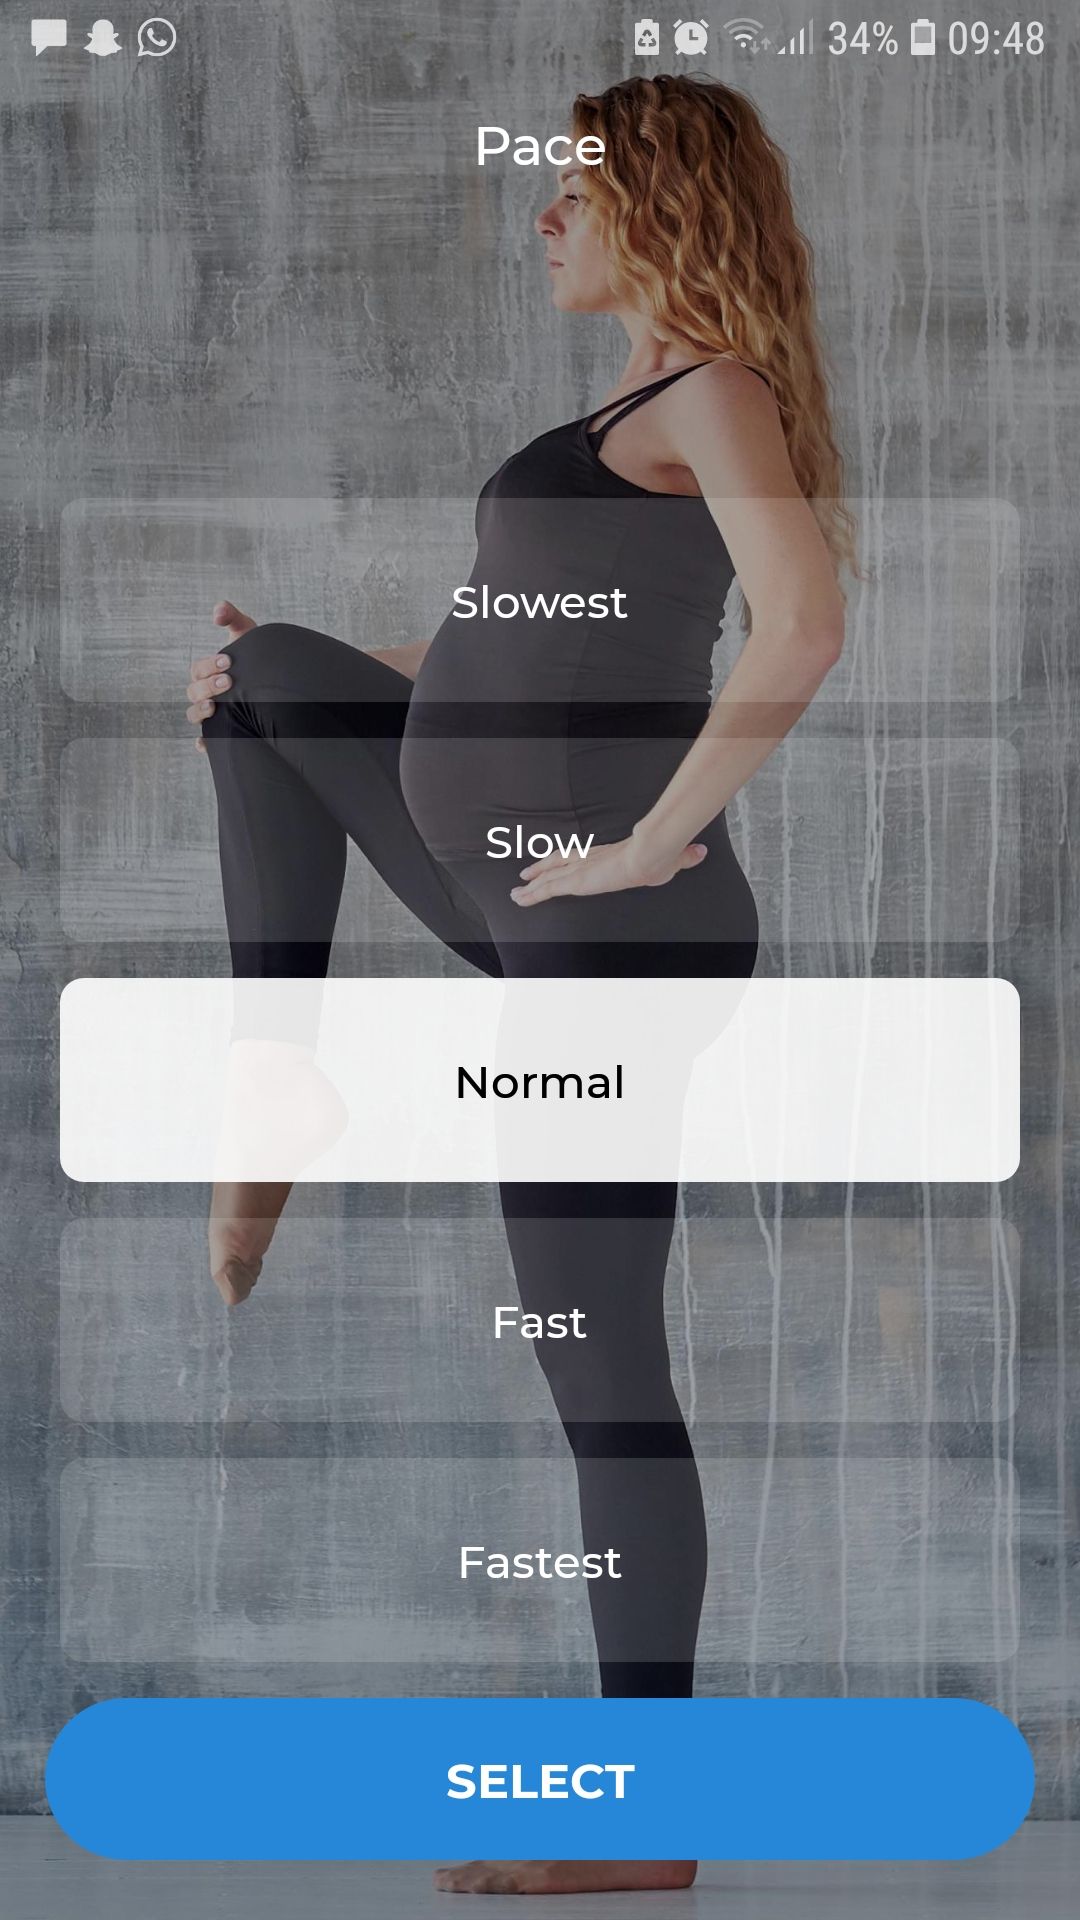 Down Dog mobile prenatal yoga app pace